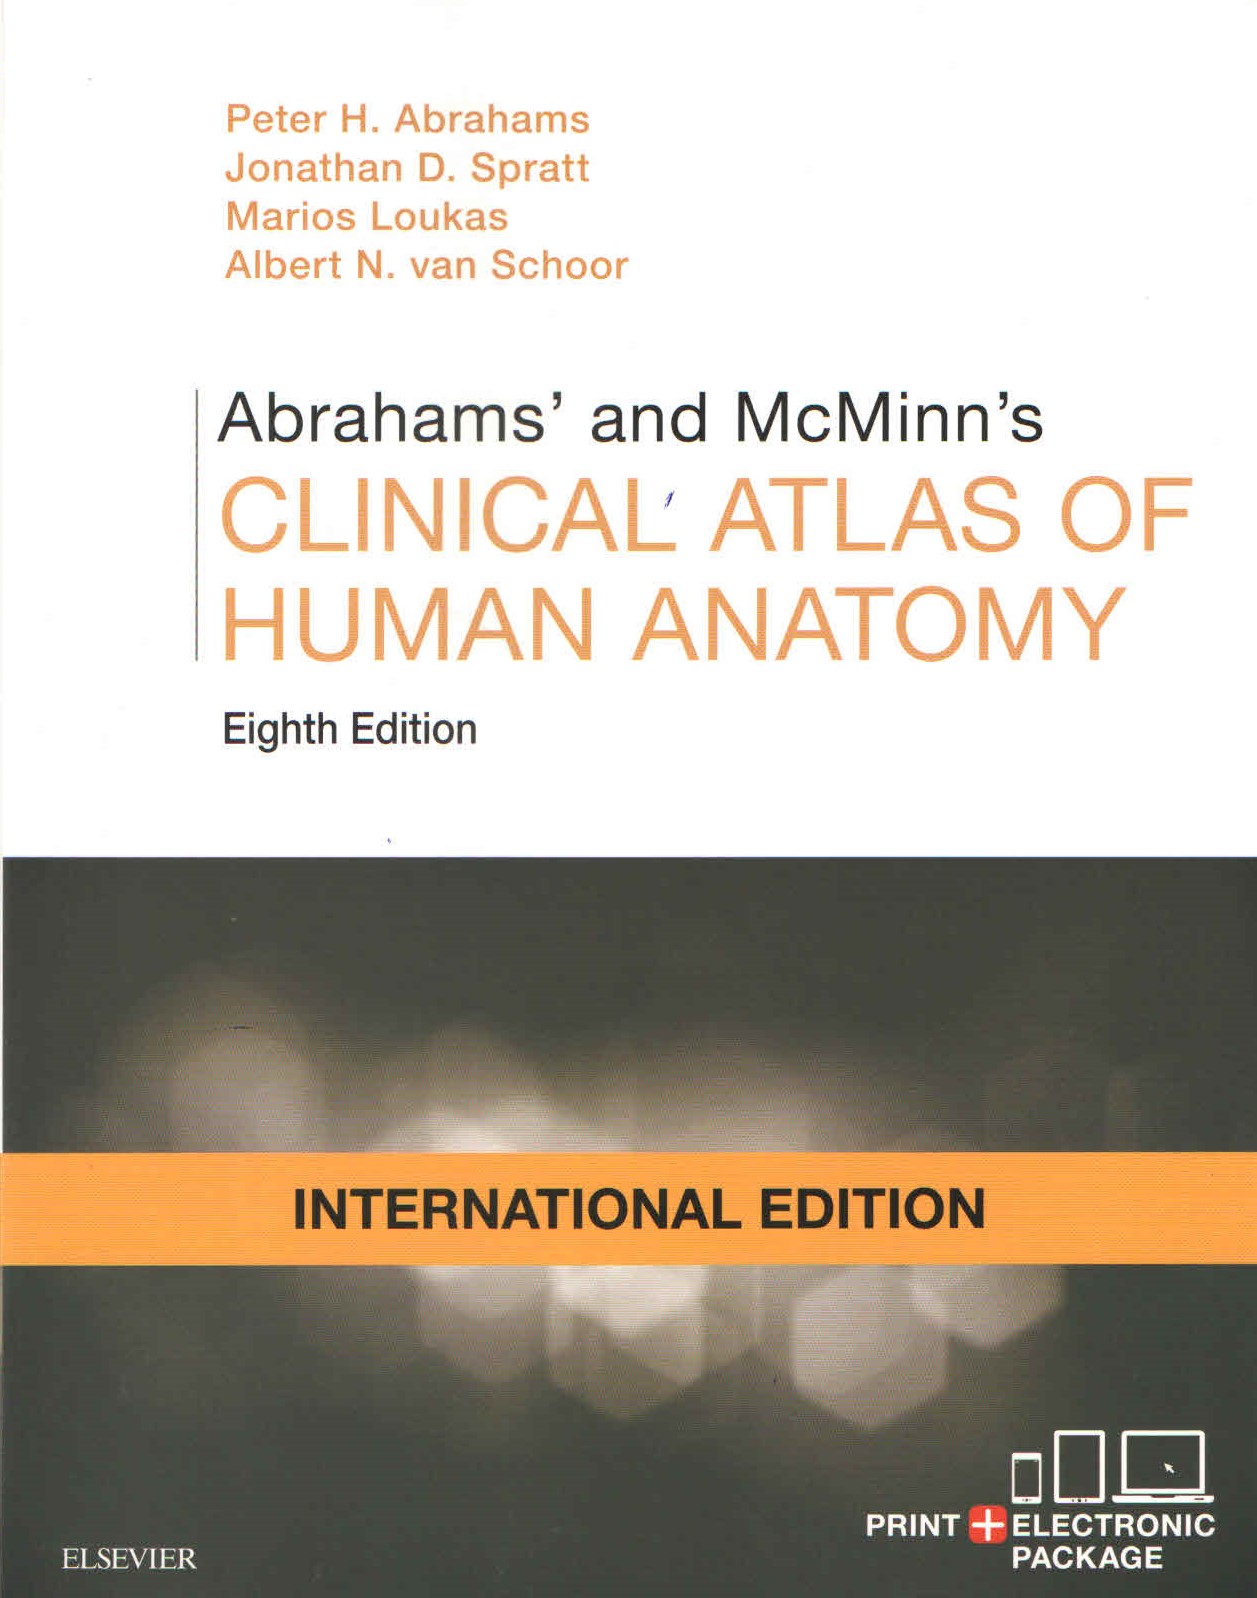 
abrahams-and-mcminn-s-clinical-atlas-of-human-anatomy-international-edition-8e-9780702073335